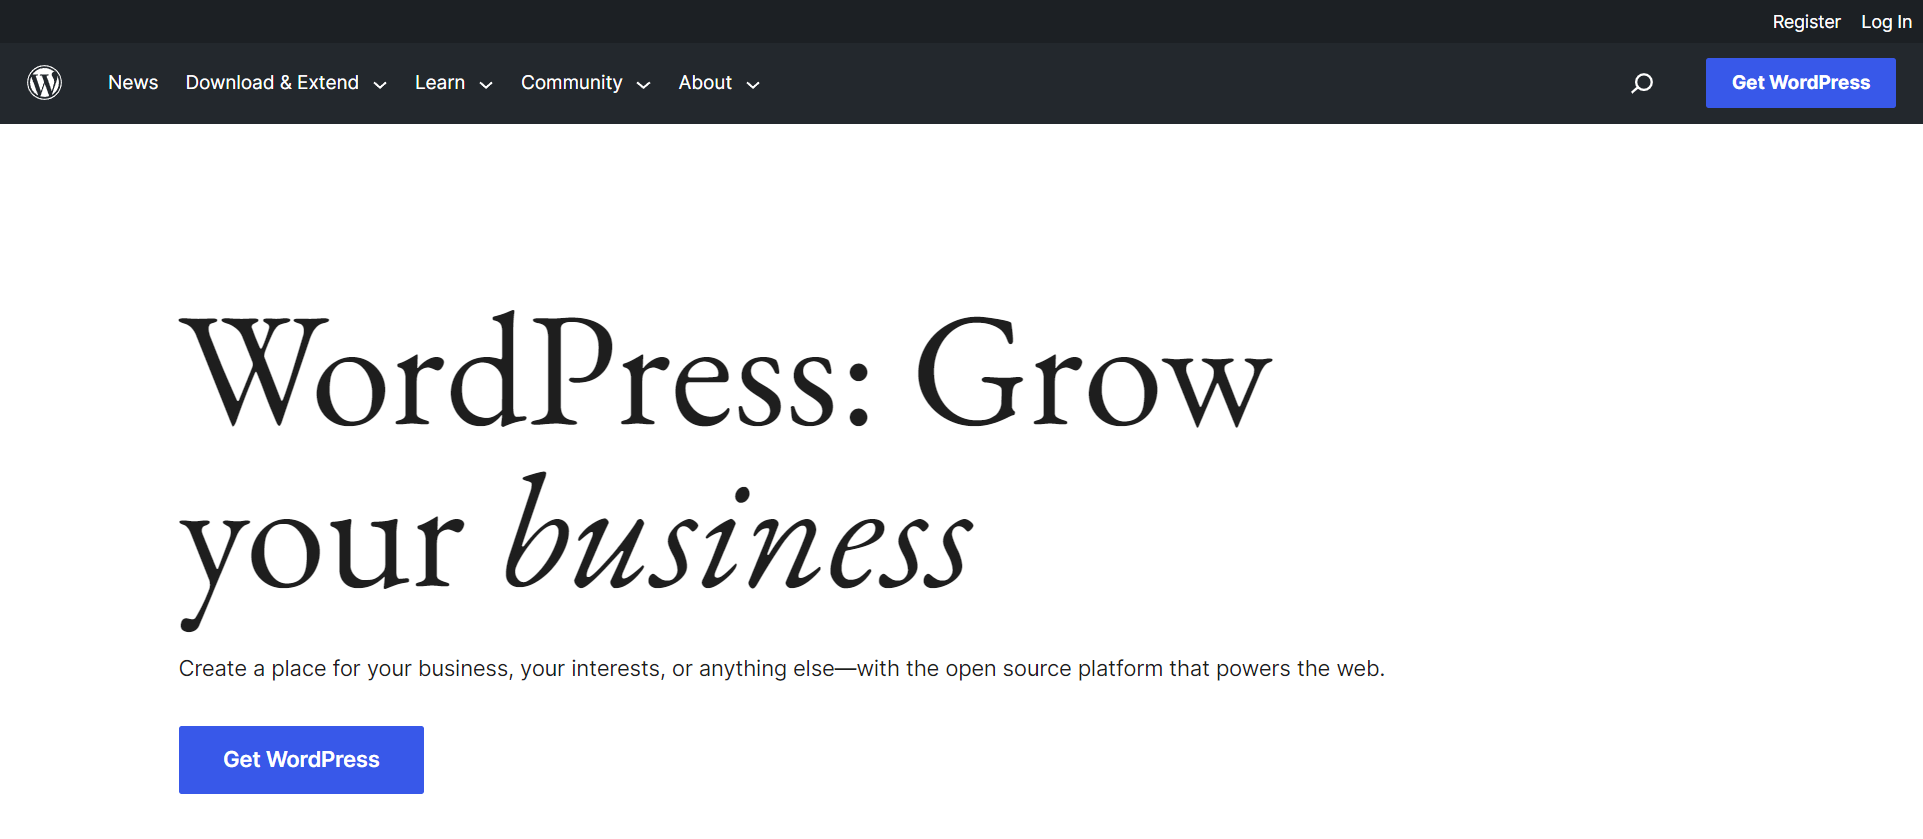 WordPress blogginf platform